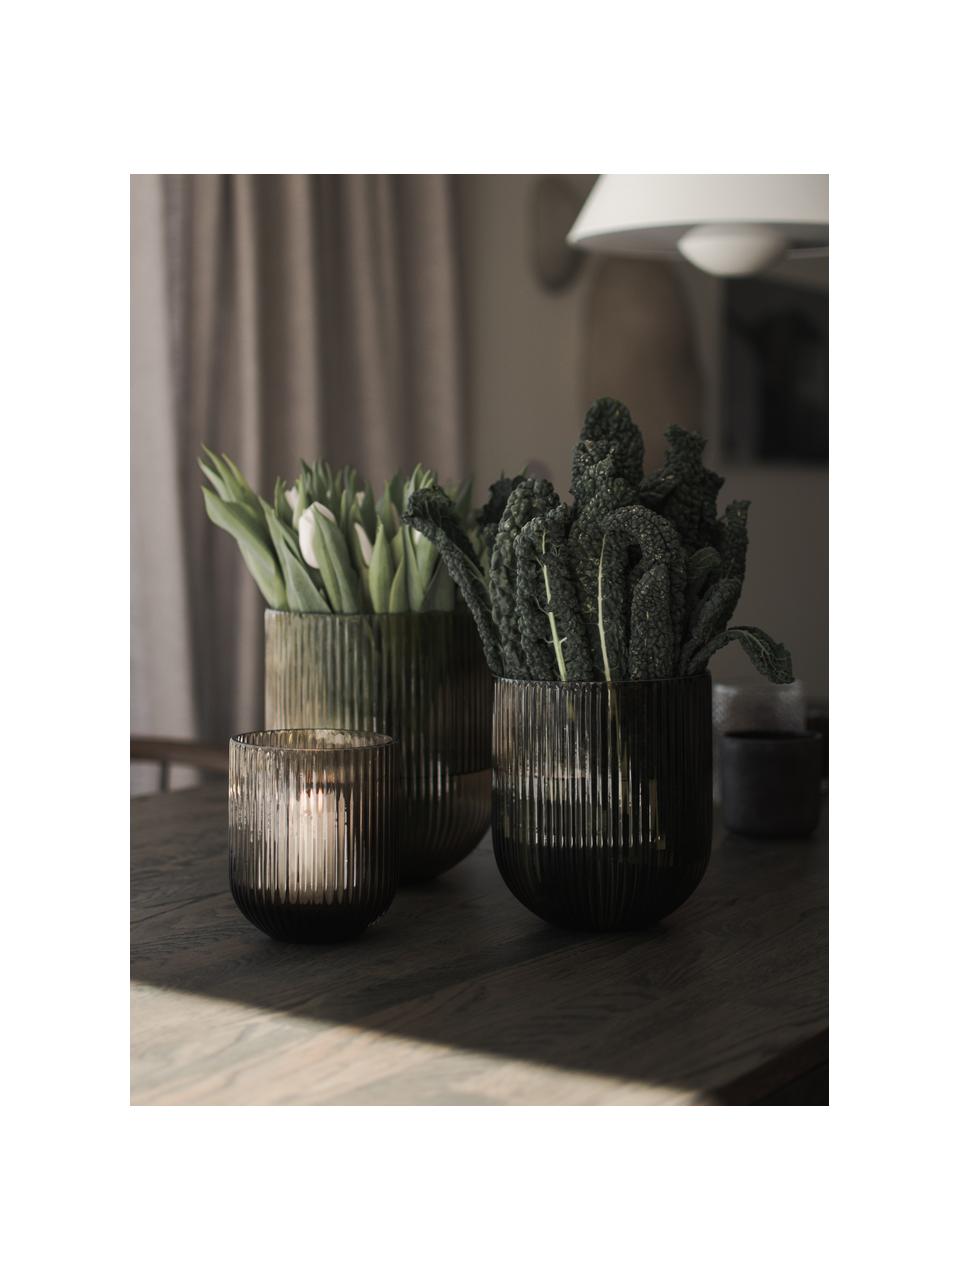 Skleněná váza Simple Stripe, V 18 cm, Sklo, Greige, poloprůhledná, Ø 16 cm, V 18 cm